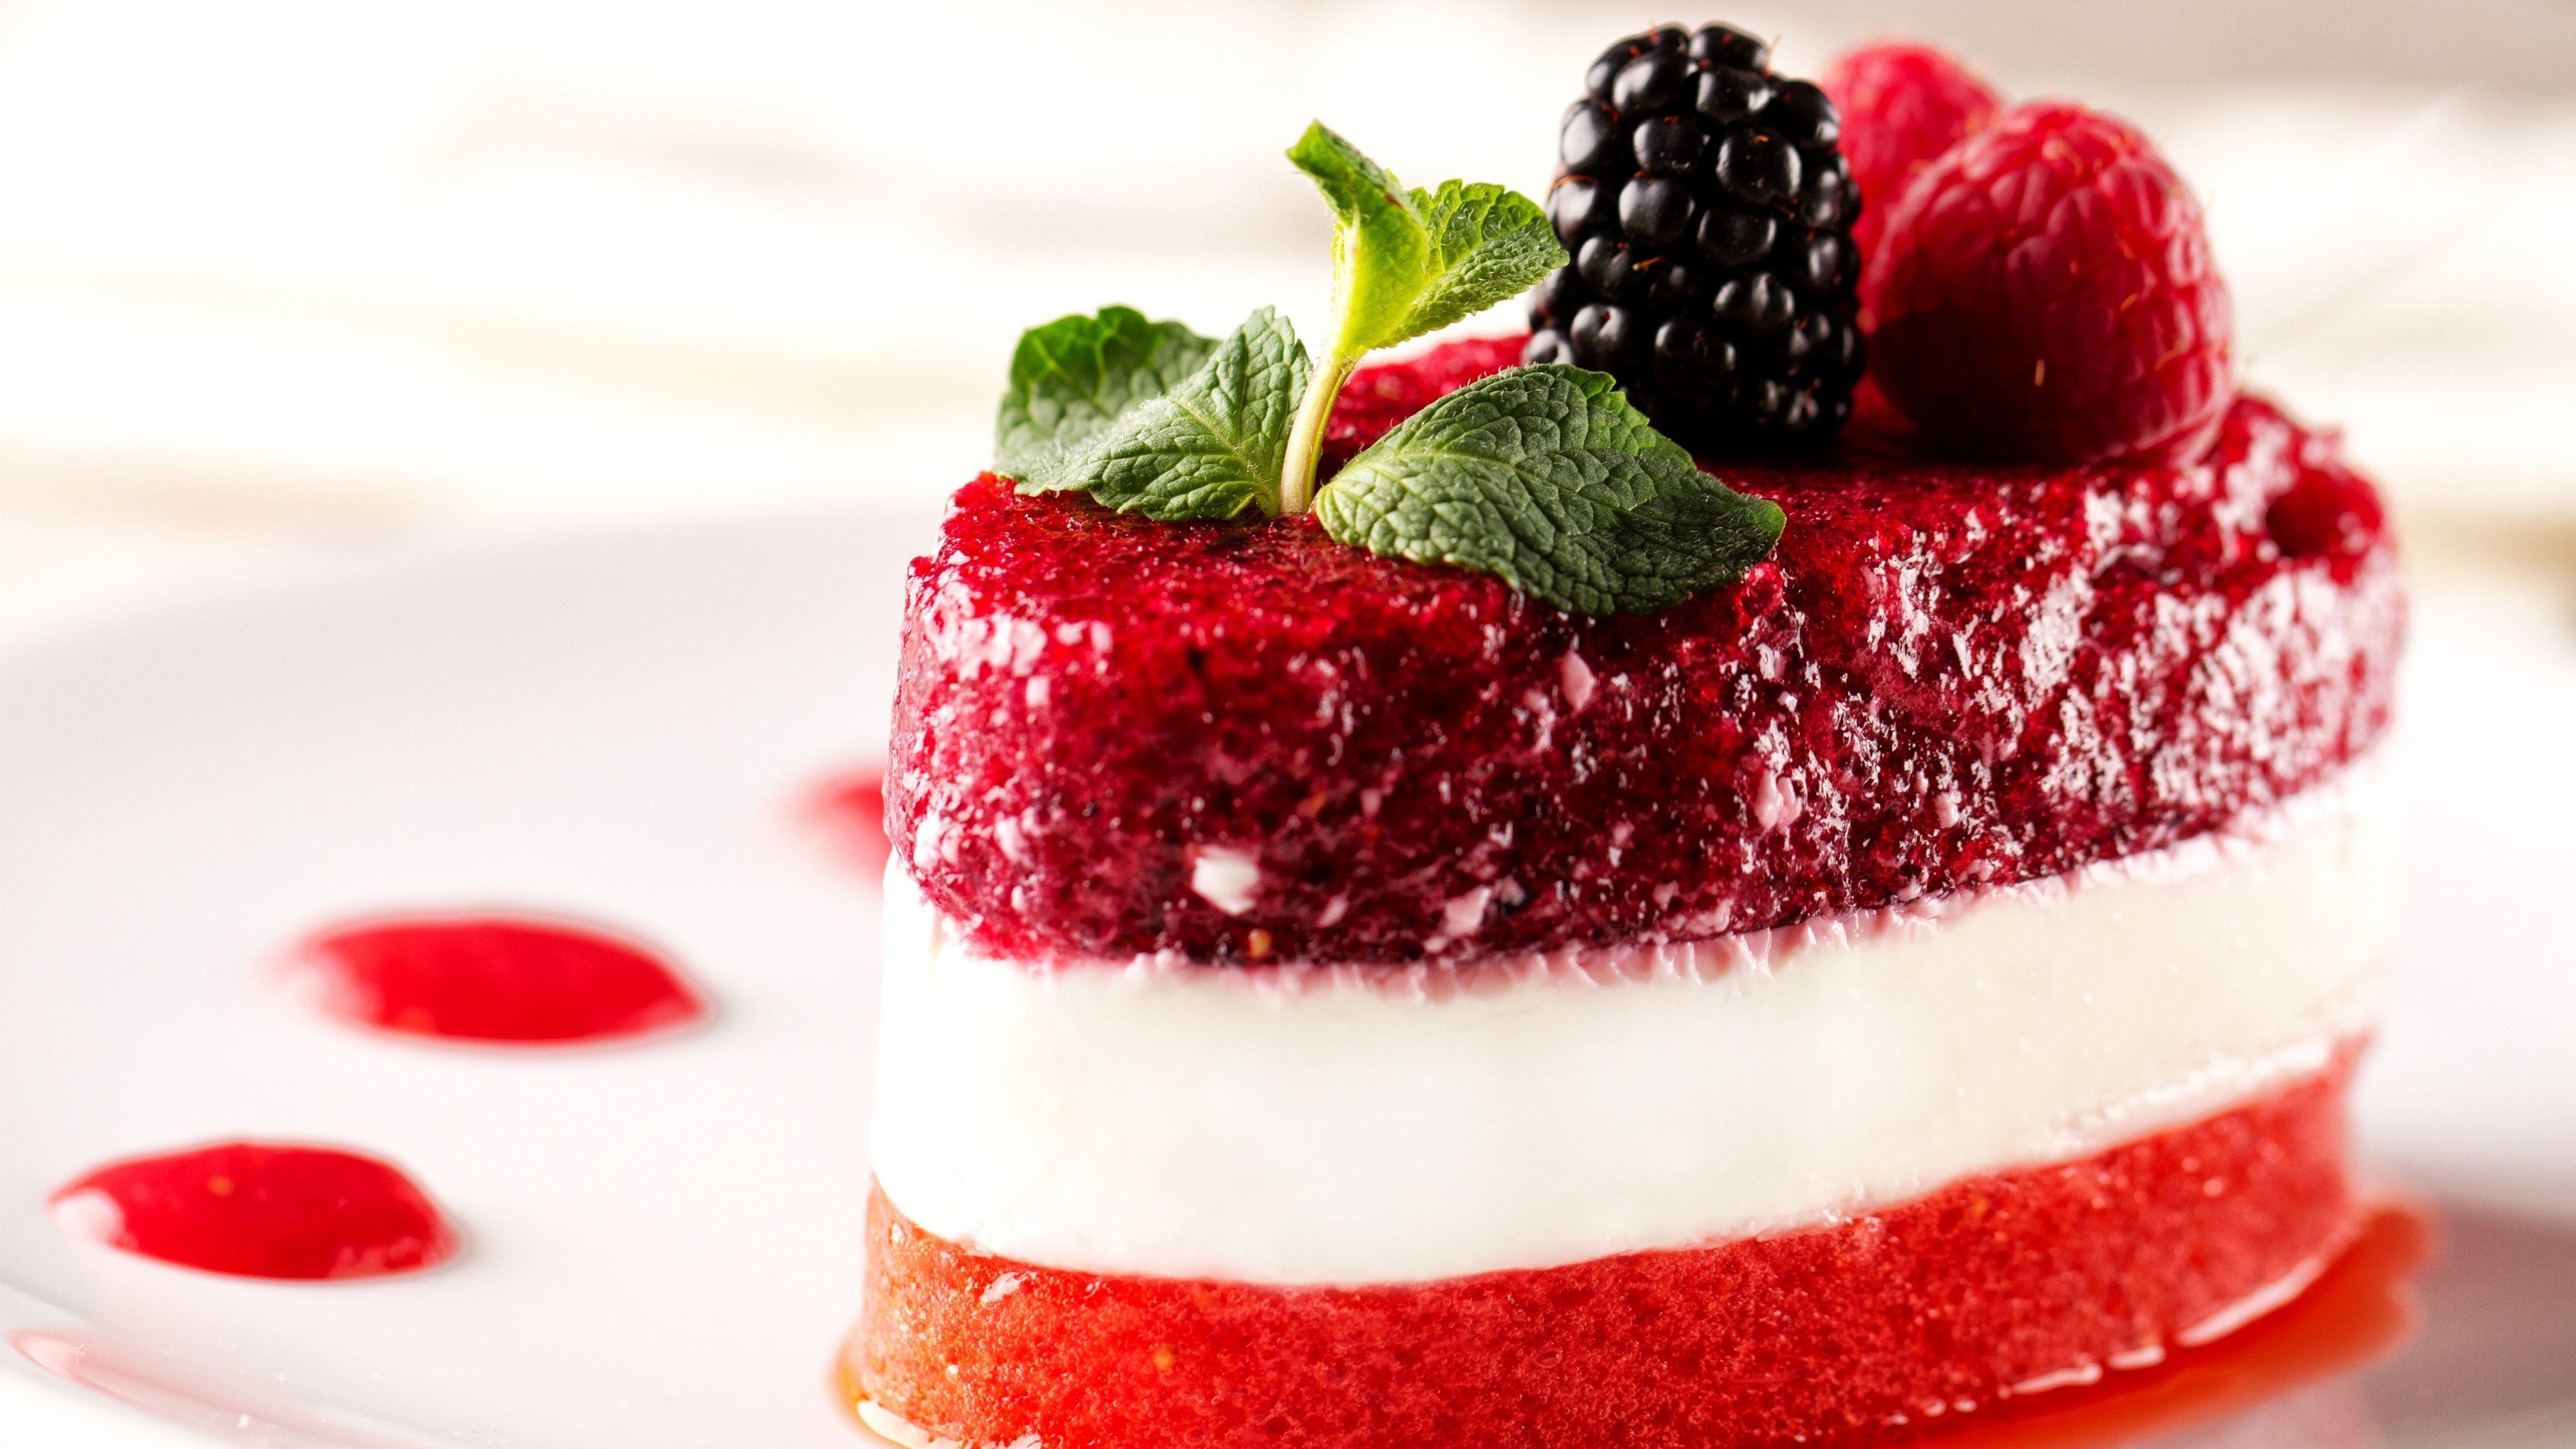 Download 4000x2250 Cake, Cream, Berries, Fruits, Dessert, Pastry